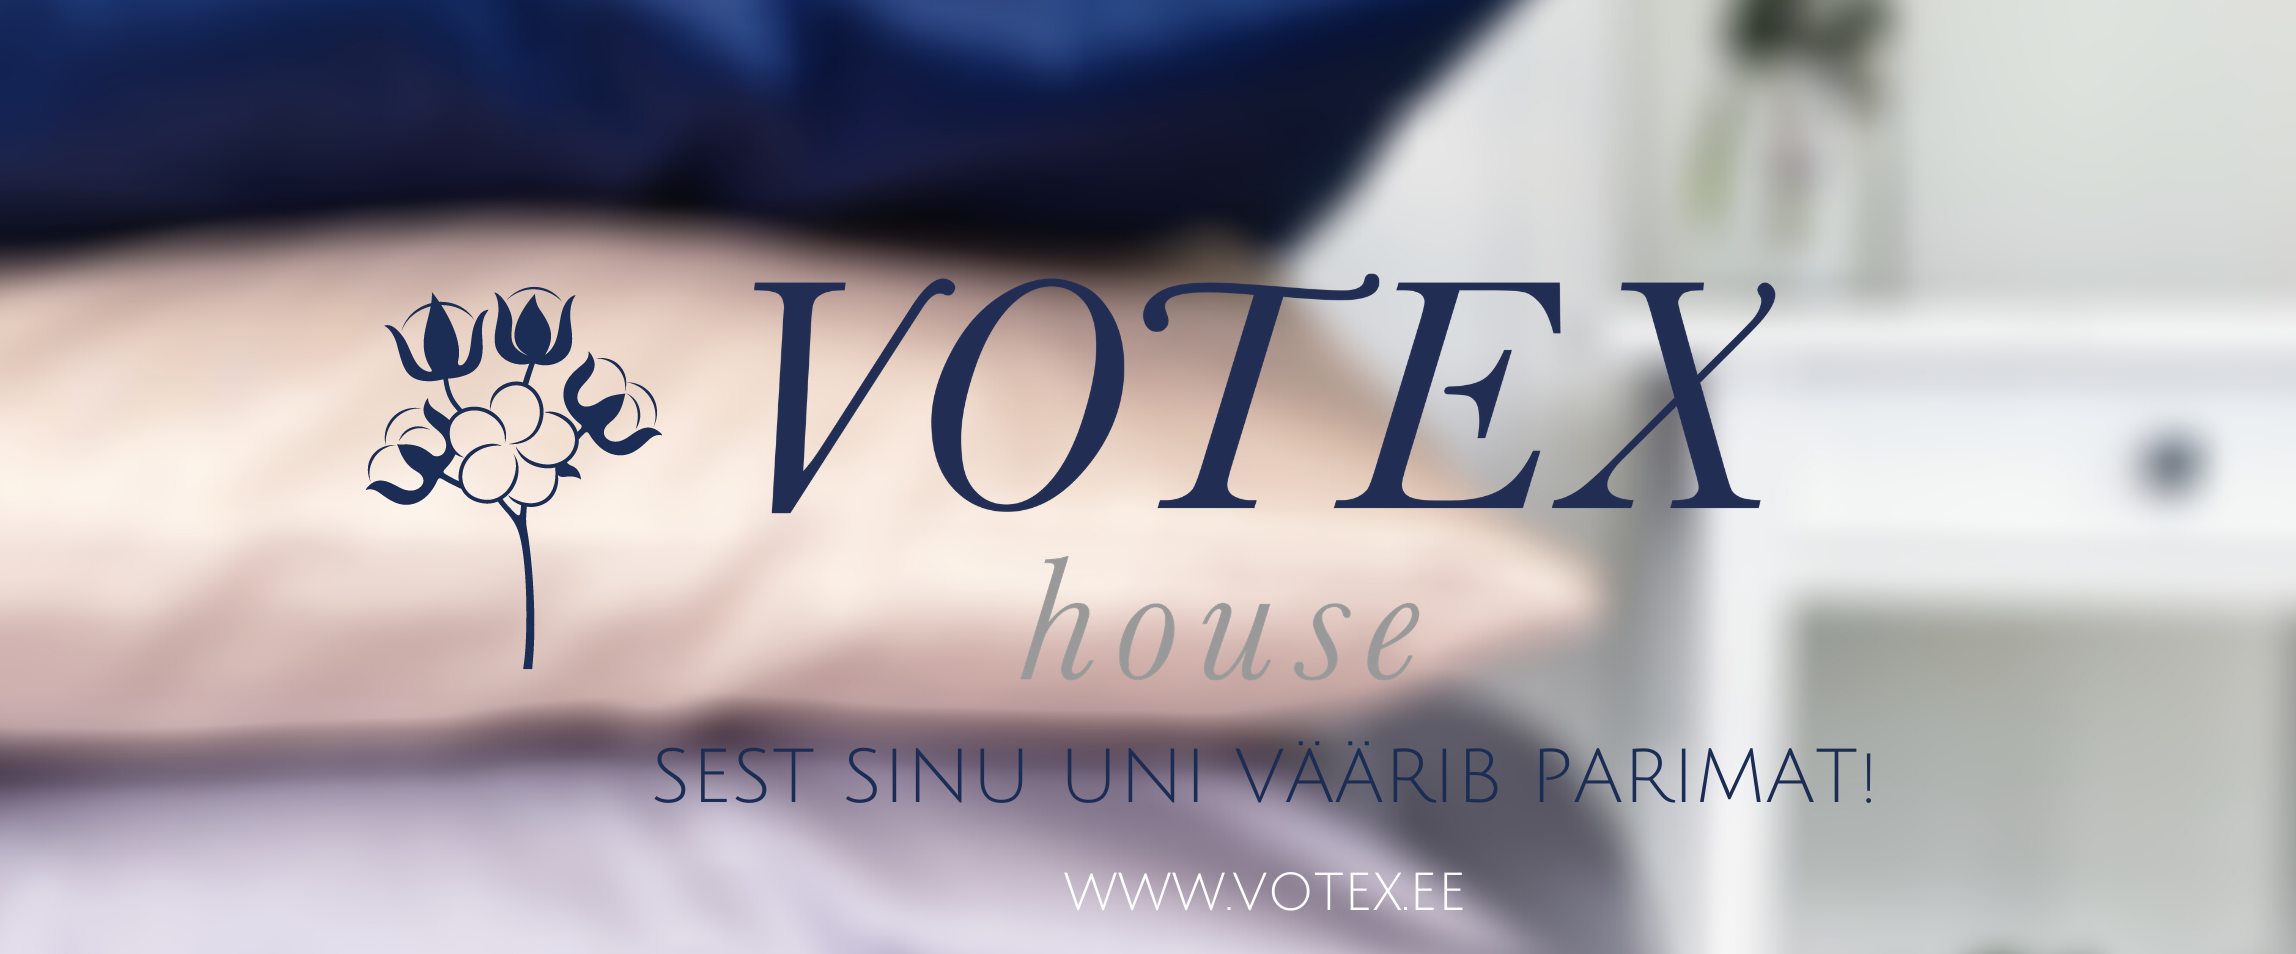 Votex House OÜ